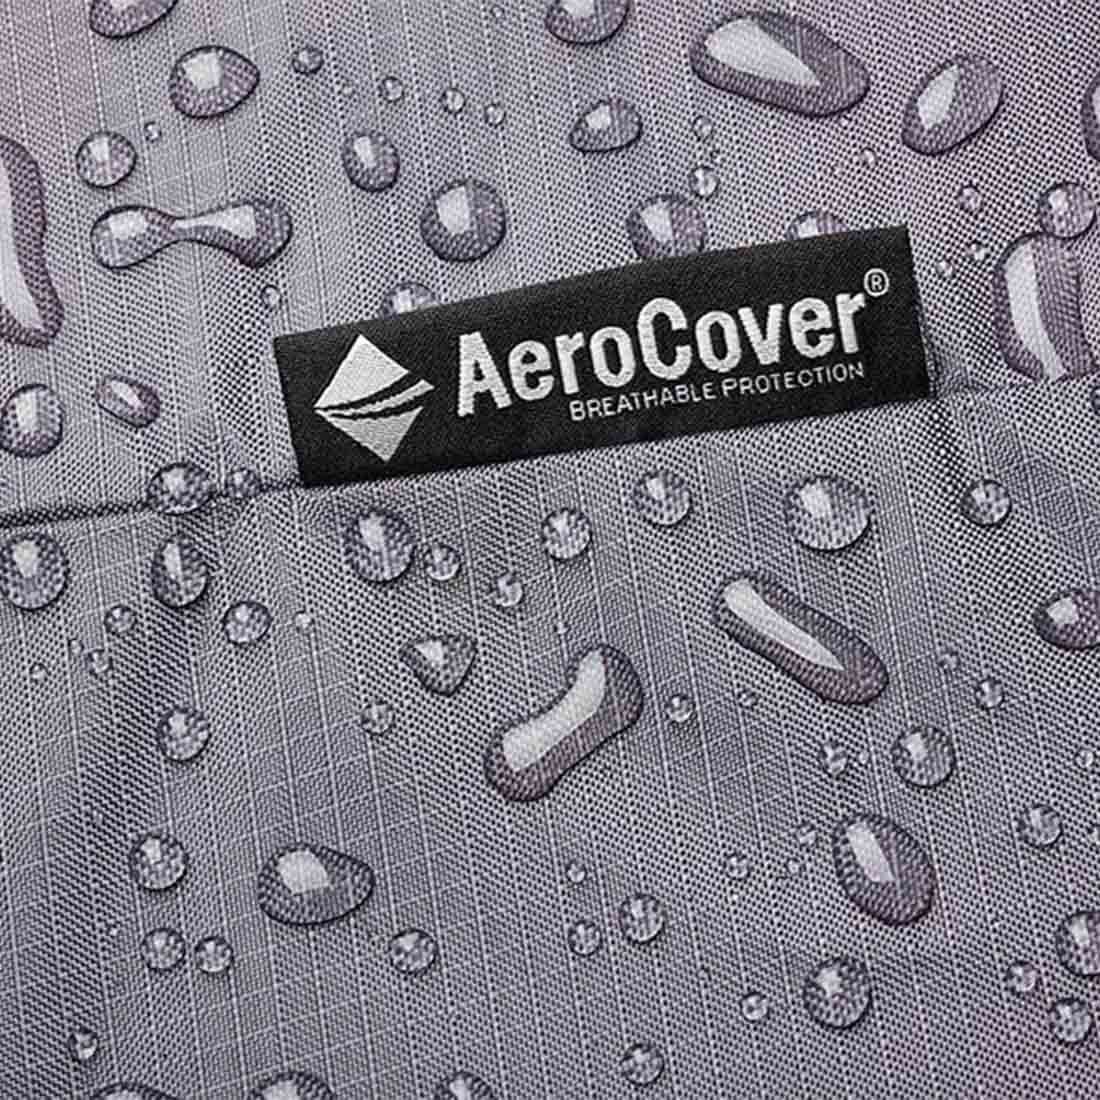 AeroCover Schutzhülle für Sitzbank 130x75x65/85cm Polyester